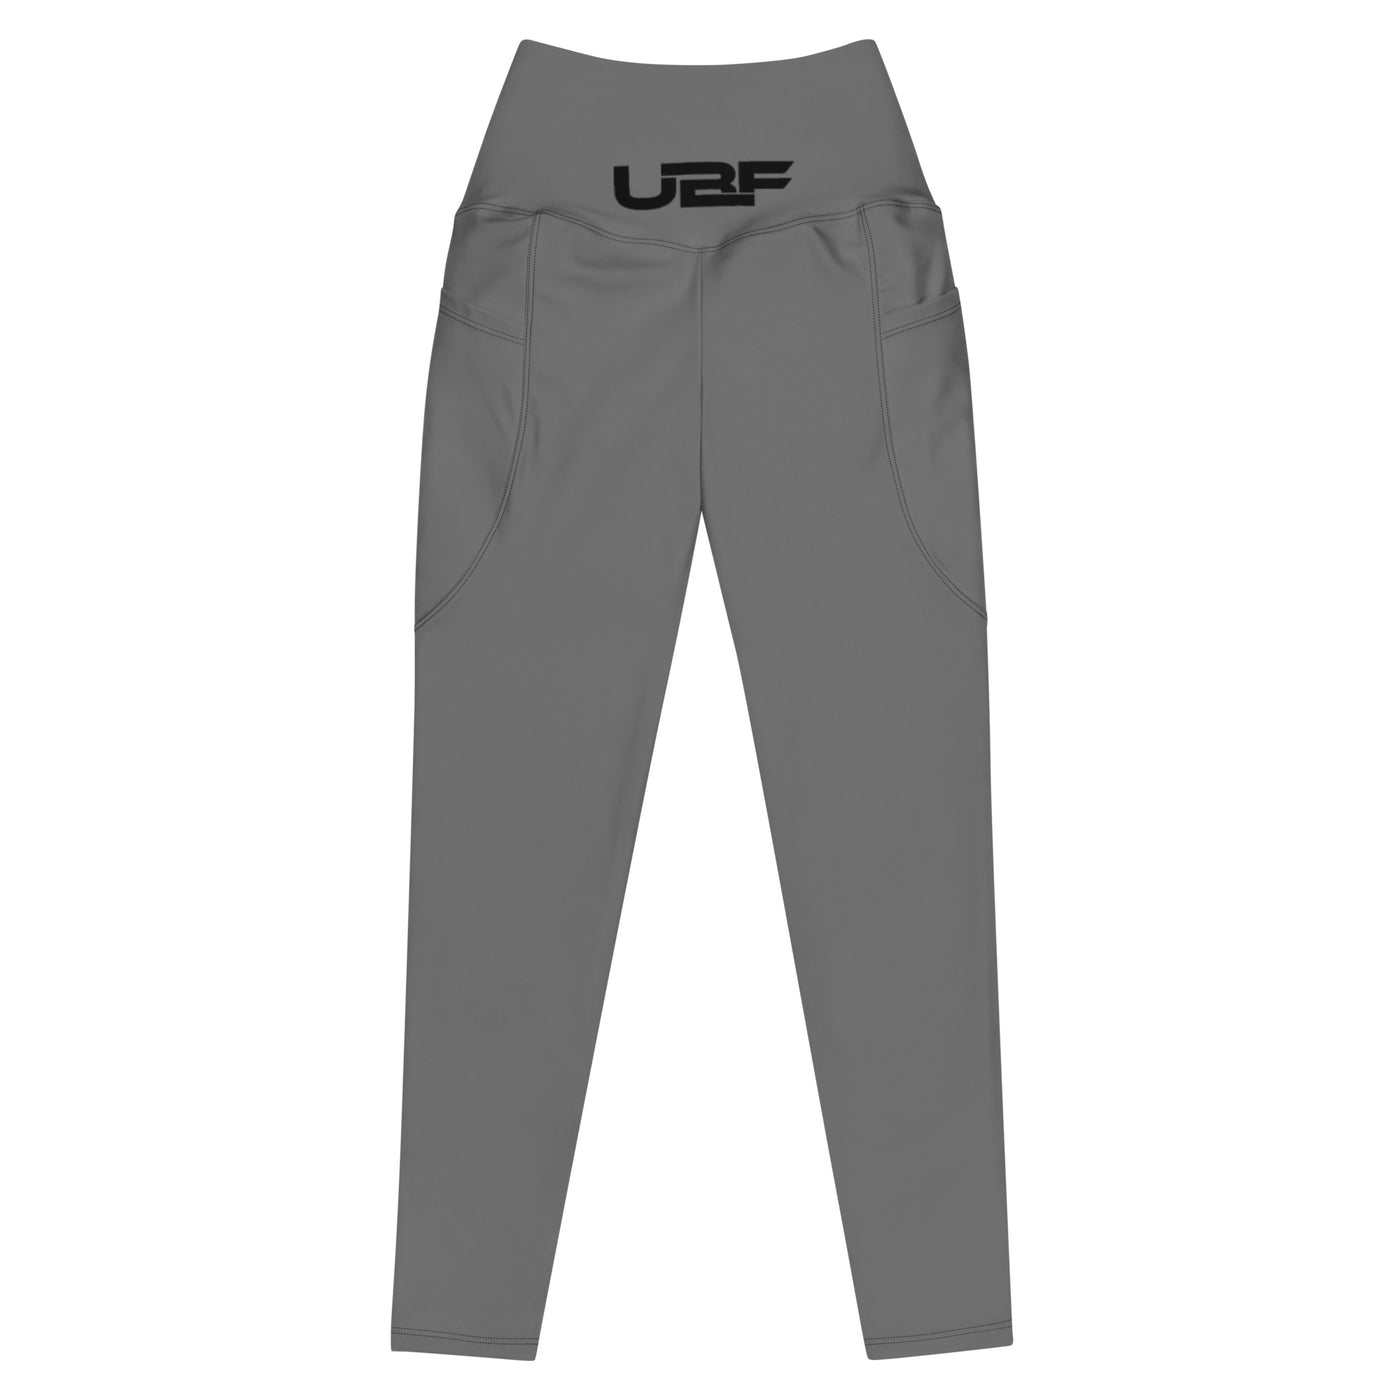 Black UBF Grey Leggings with pockets